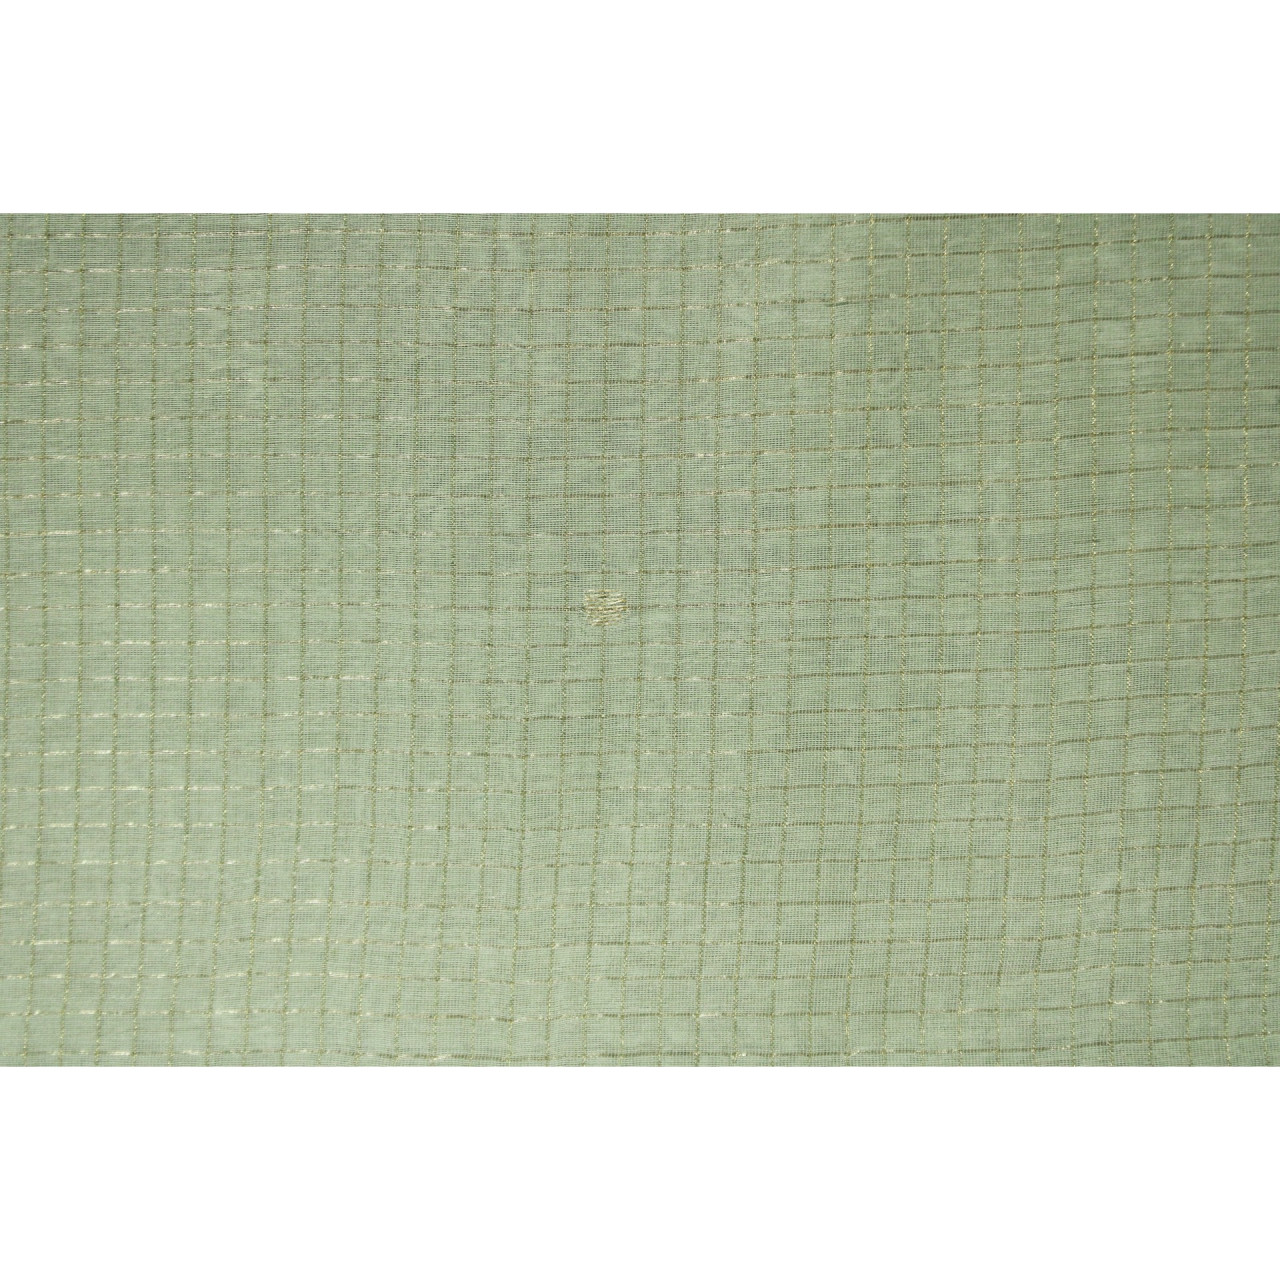 (180) Mulberry silk, zari, cotton Azo free dyed Chanderi yardage with Zari motif - Pistachio green, checks, horizontal stripes, vertical stripes